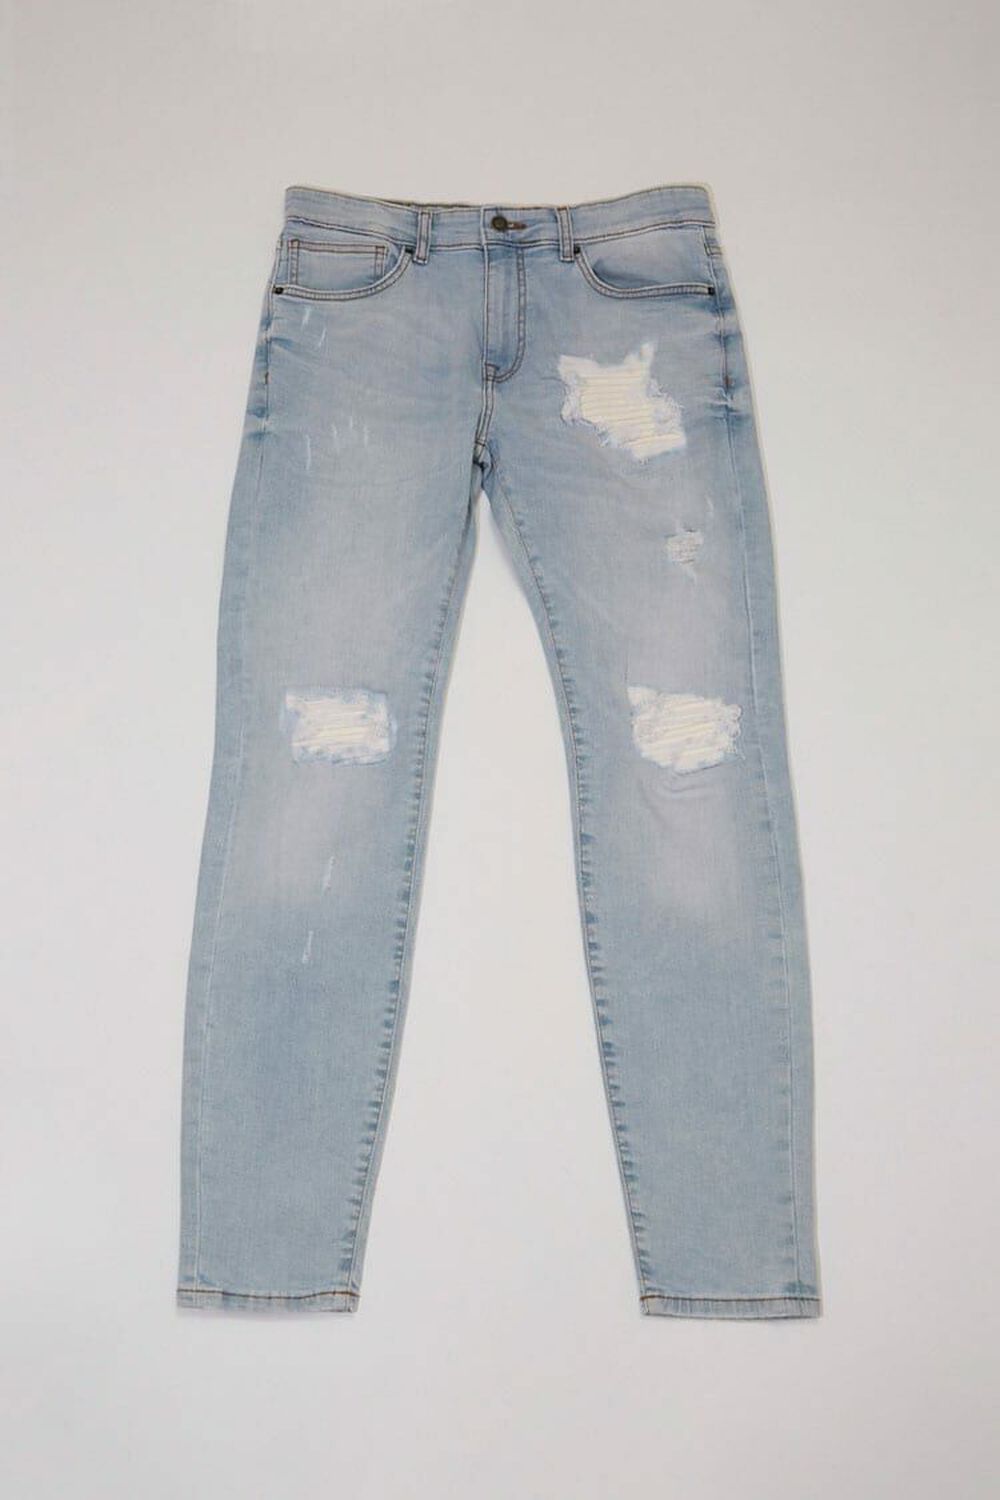 LIGHT DENIM Distressed Faded Jeans, image 1